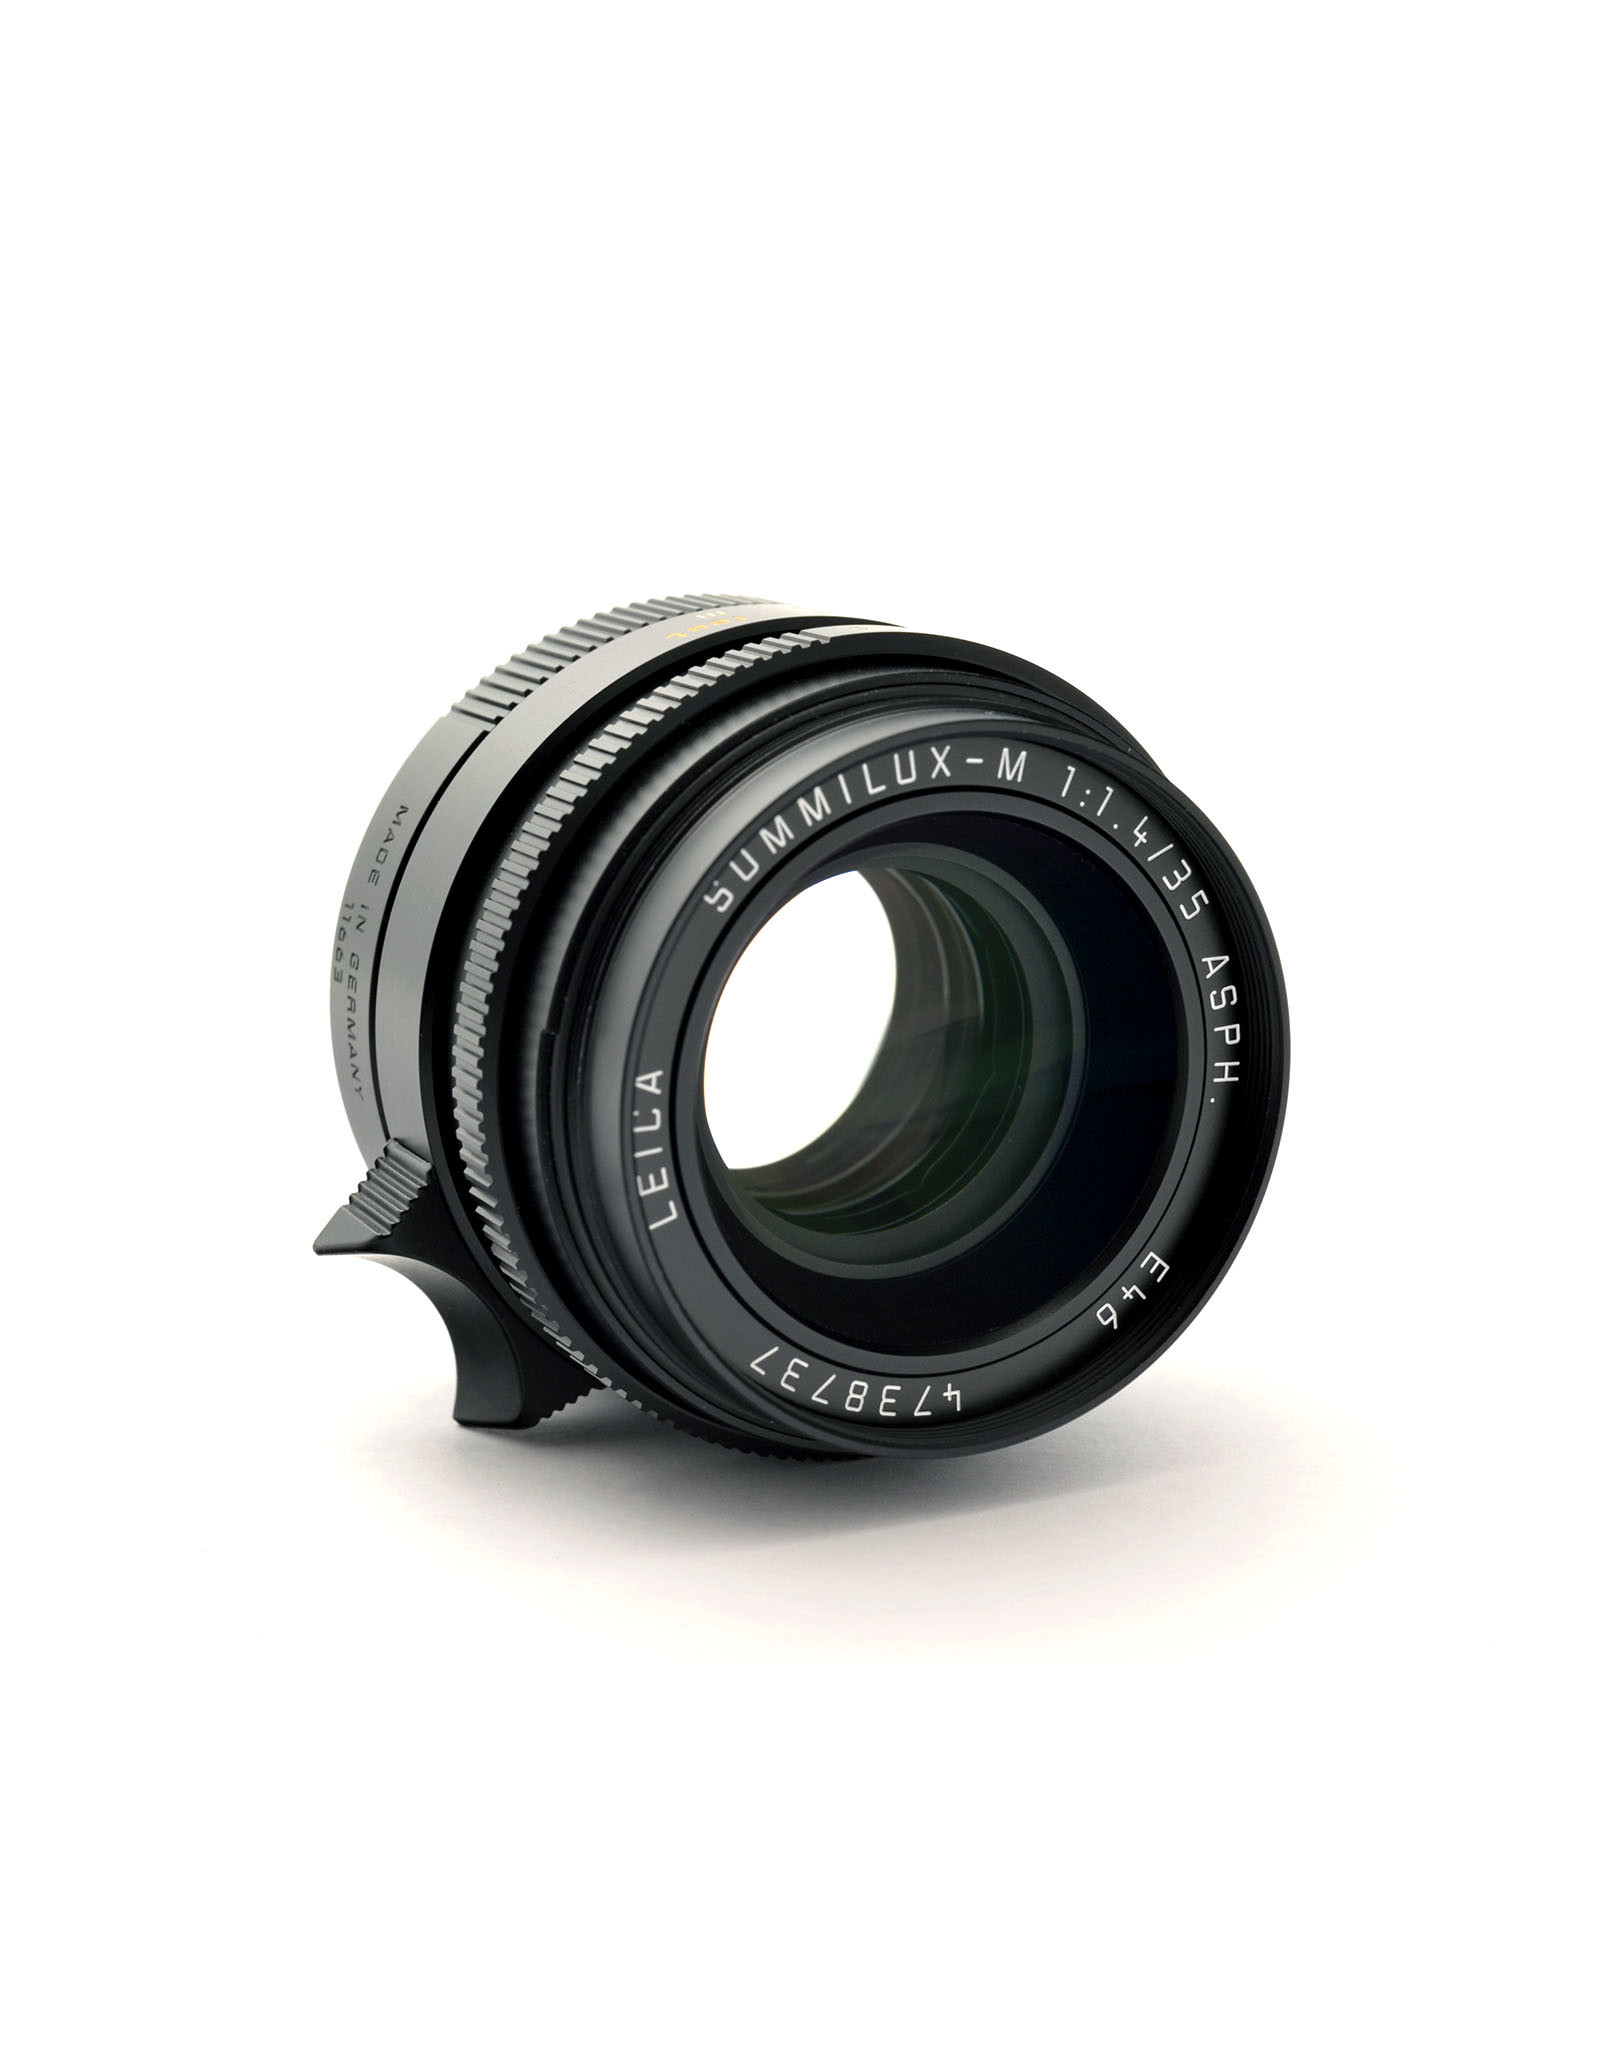 Leica Leica 35mm f1.4 Summilux-M ASPH FLE Black   ALC127001